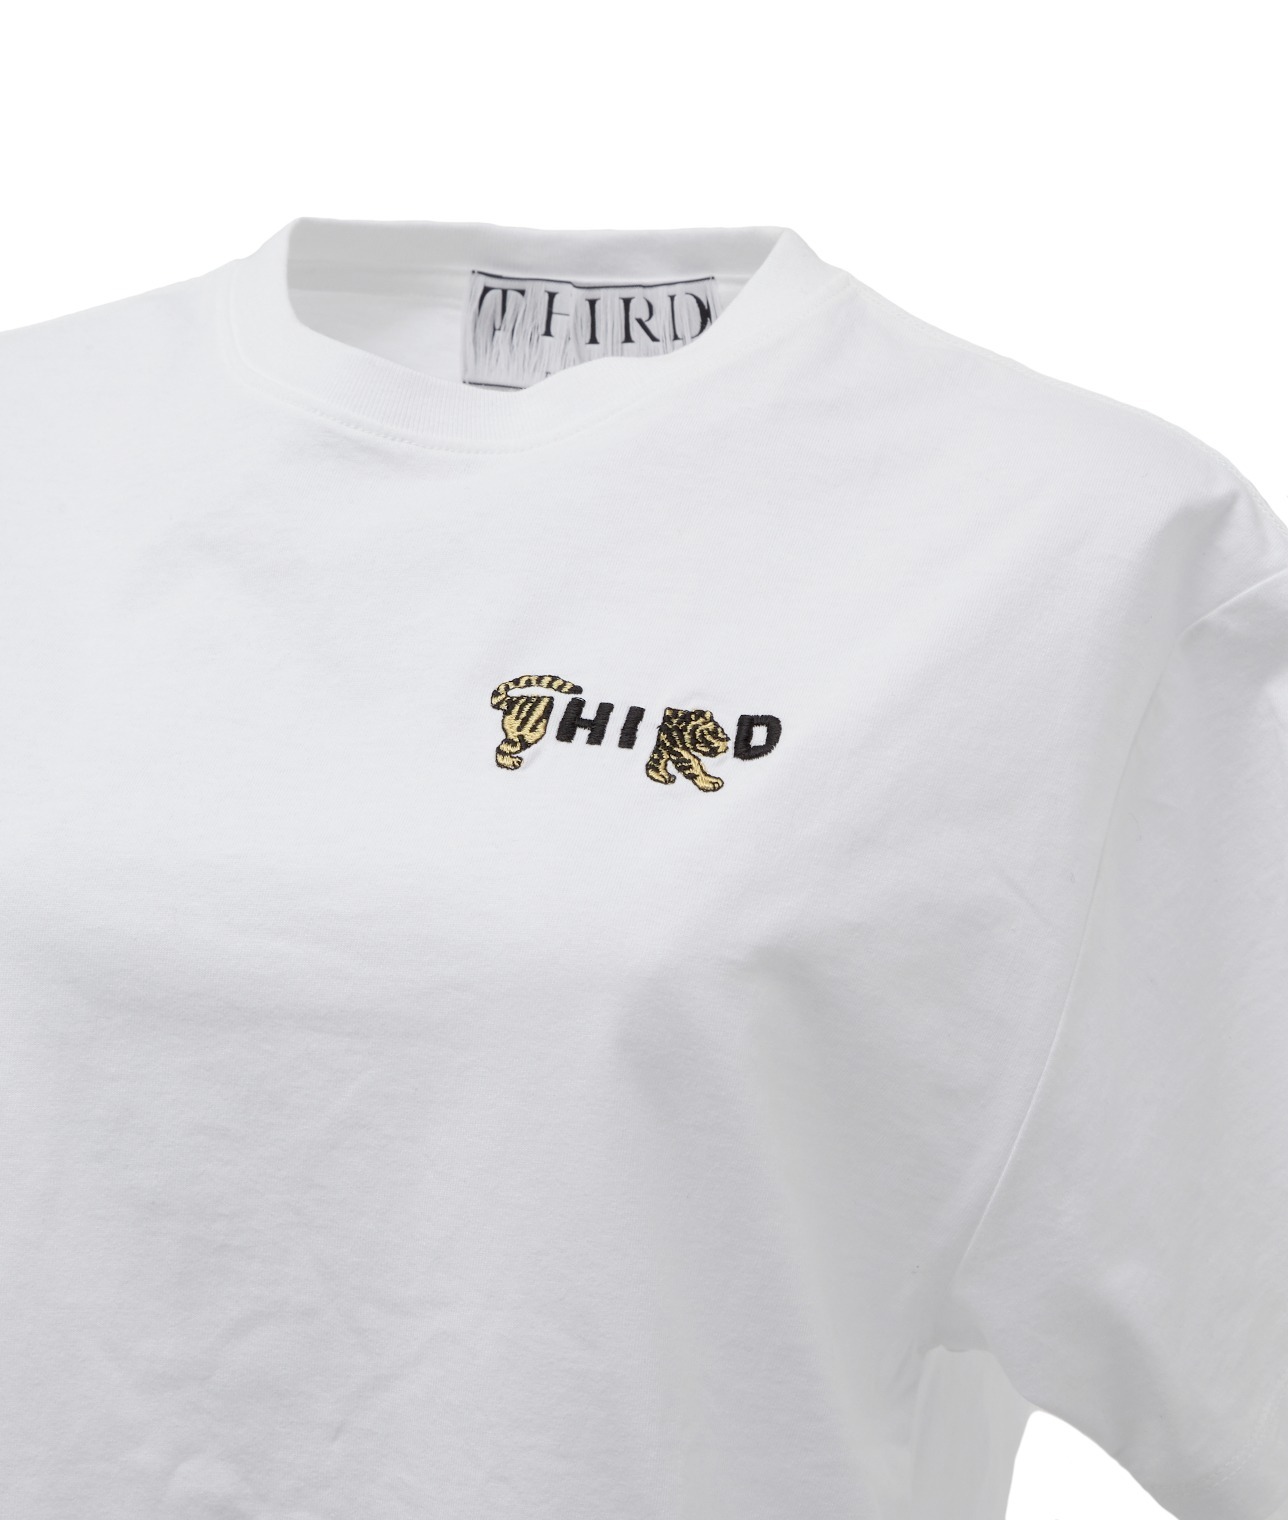 ”THIRD” Tigerロゴ刺繍Tシャツ 詳細画像 ホワイト 3